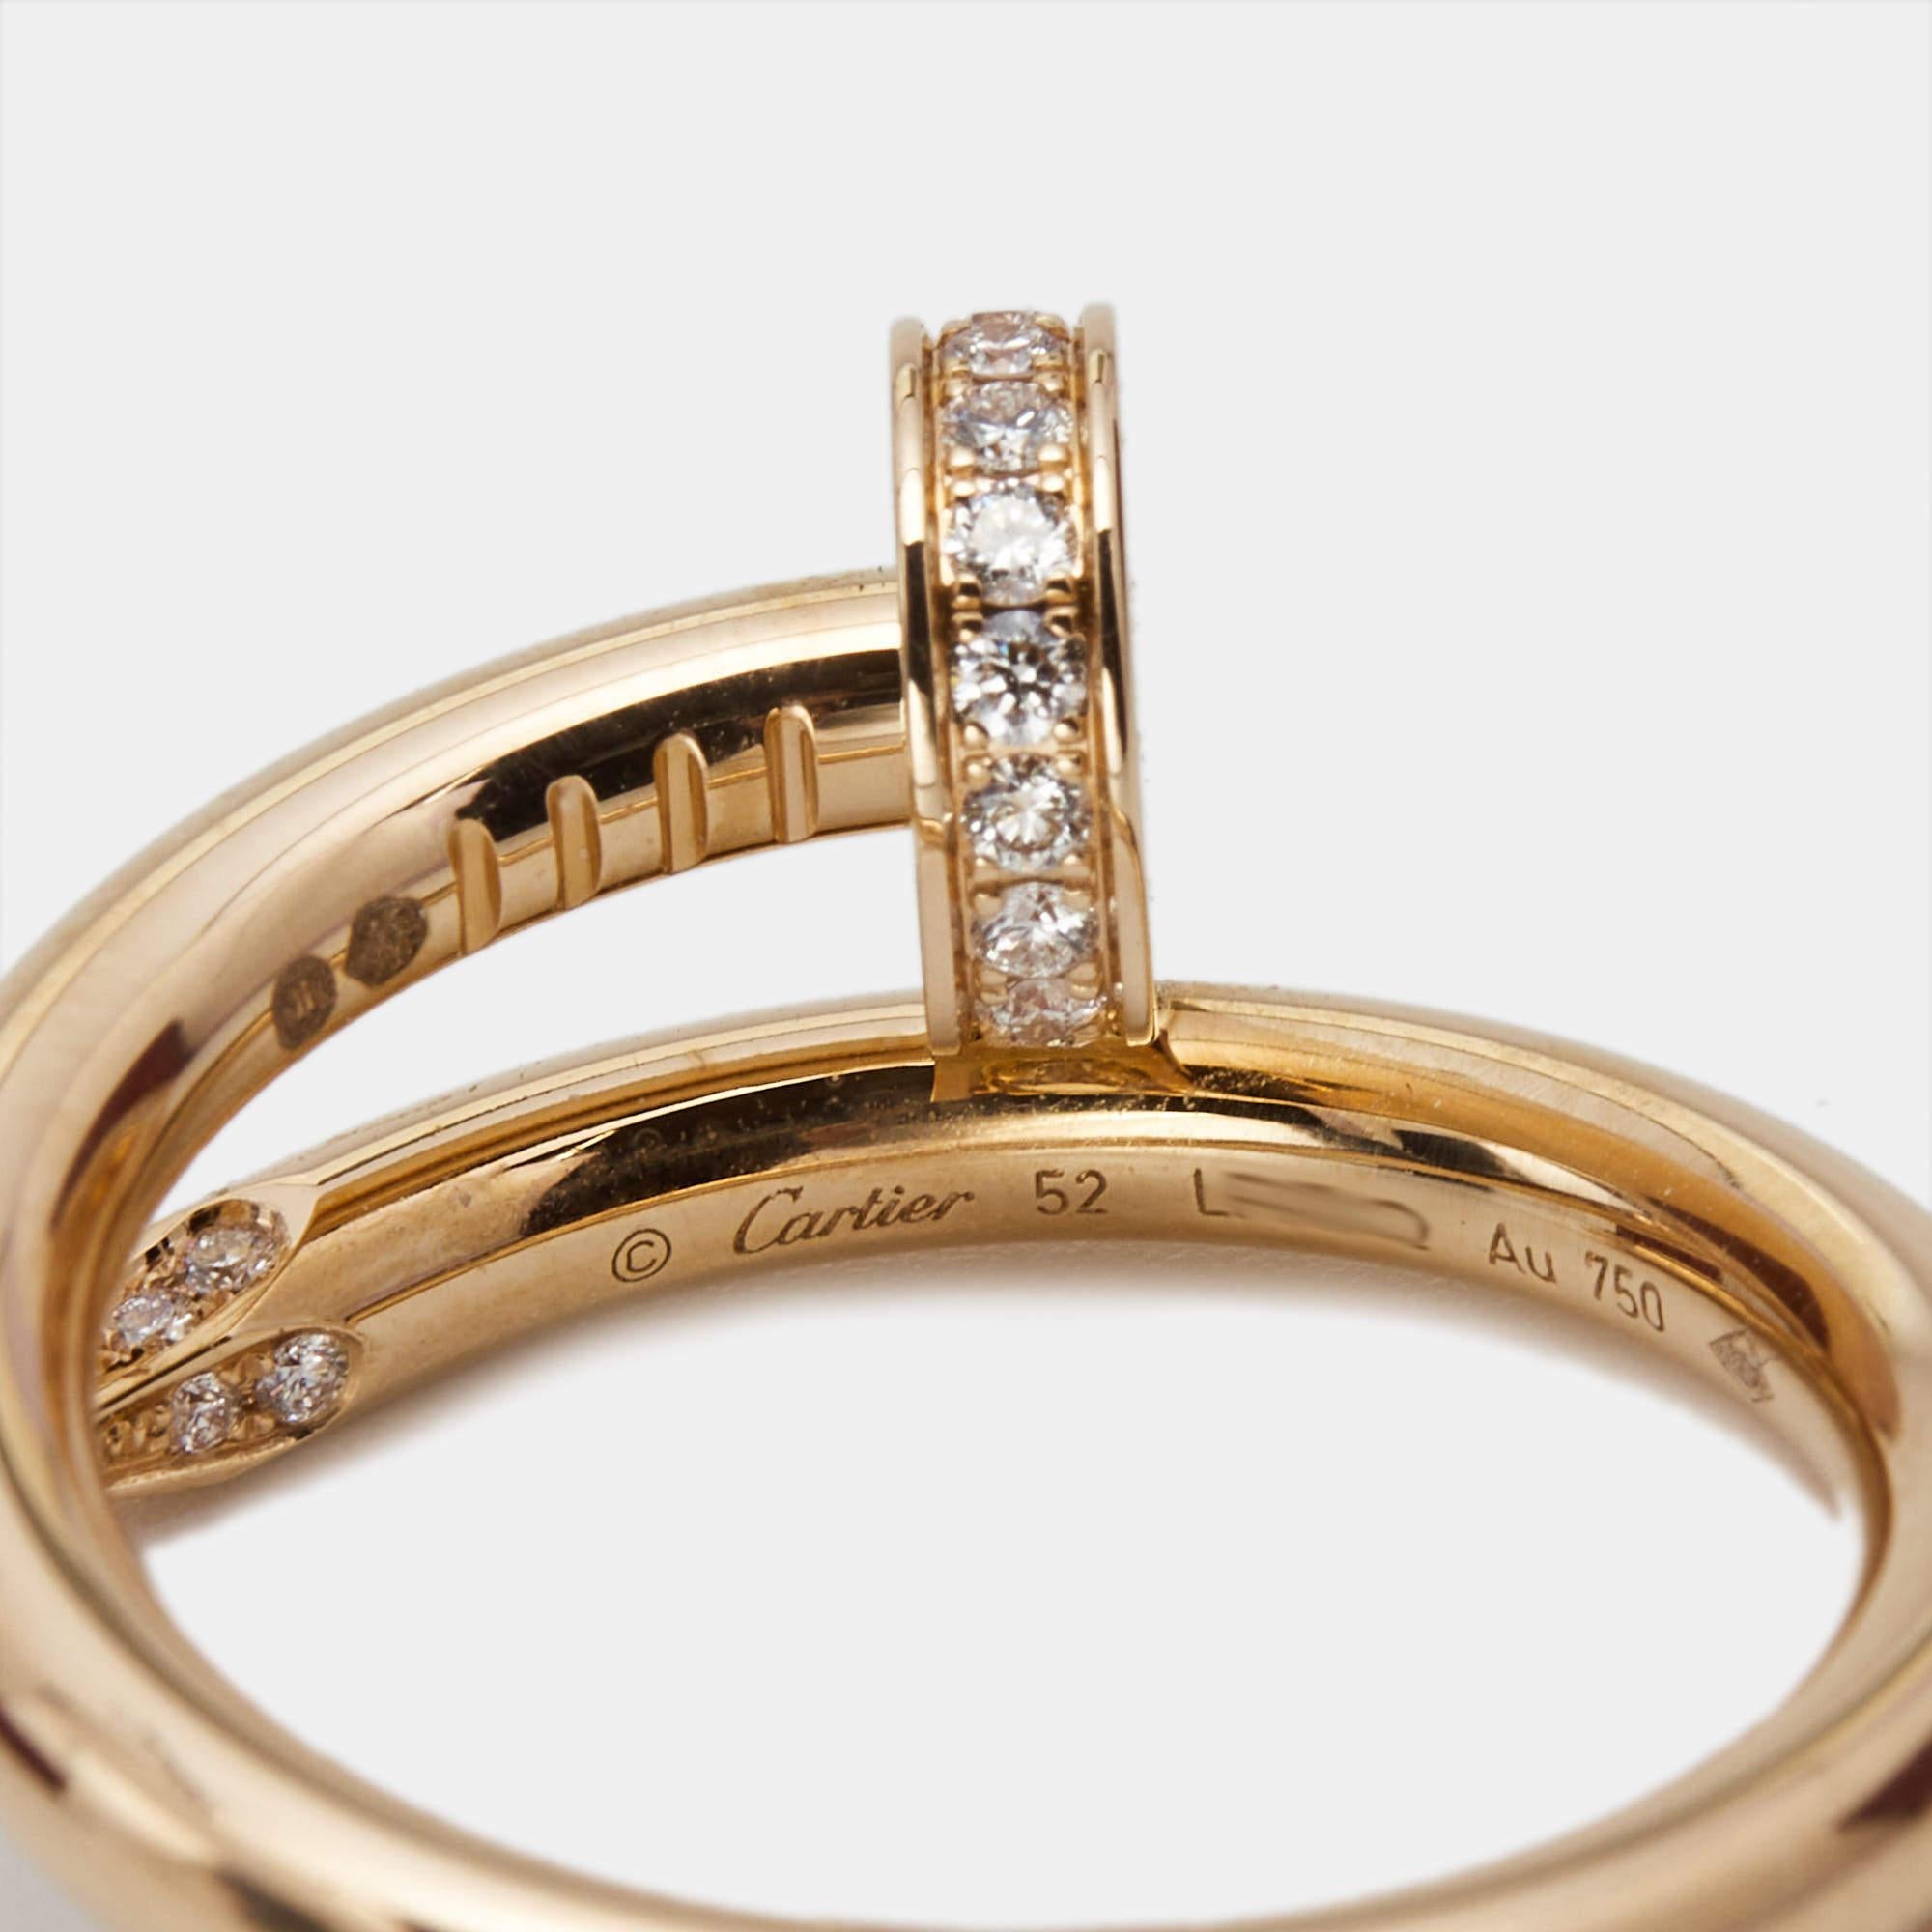 Contemporary Cartier Juste Un Clou Diamonds 18k Yellow Gold Ring Size 52 For Sale